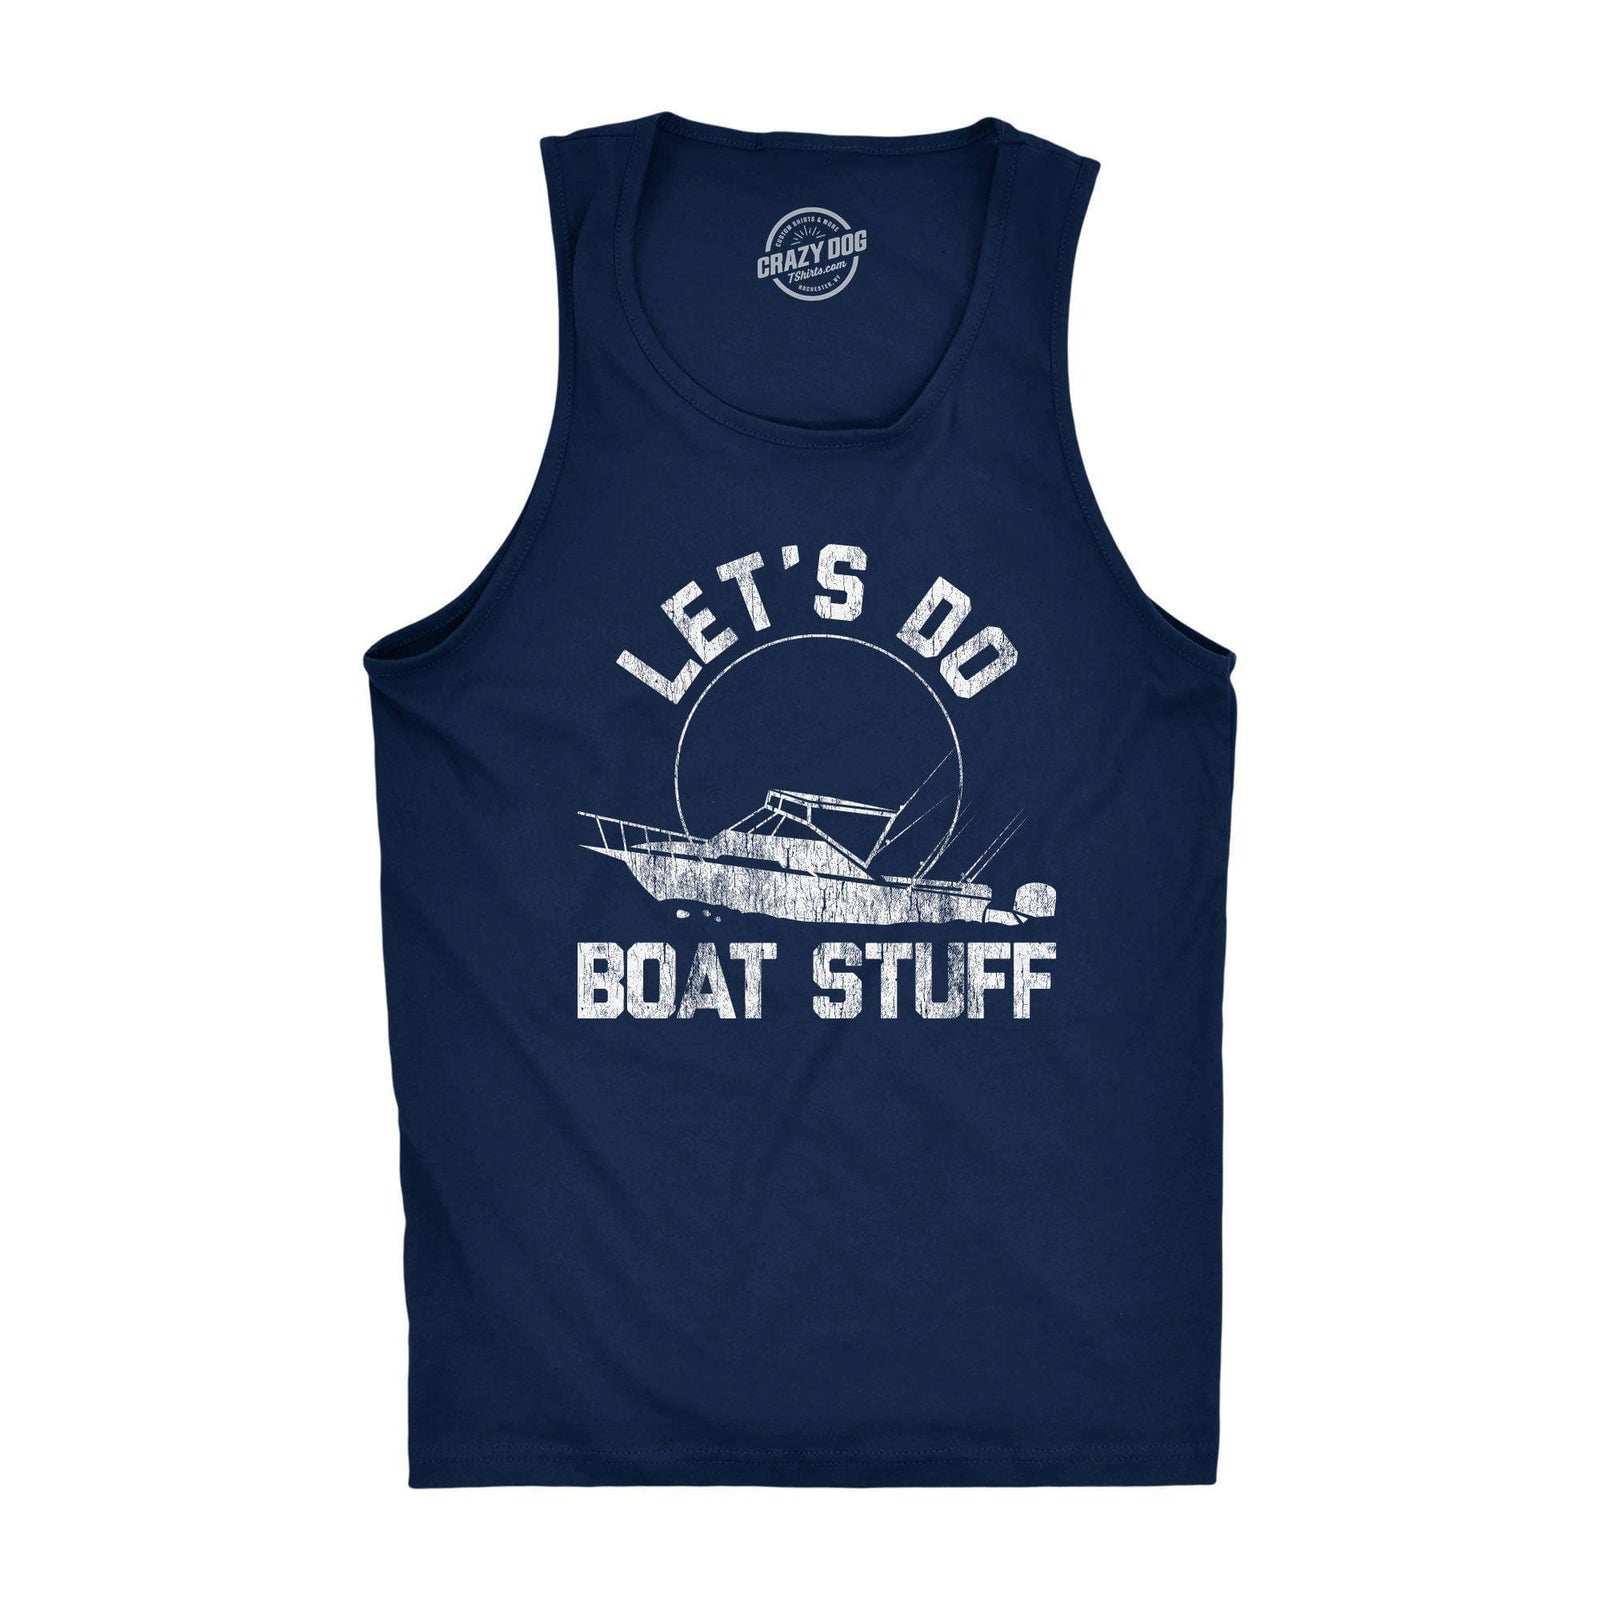 Let's Do Boat Stuff Men's T Shirt - Crazy Dog T-Shirts